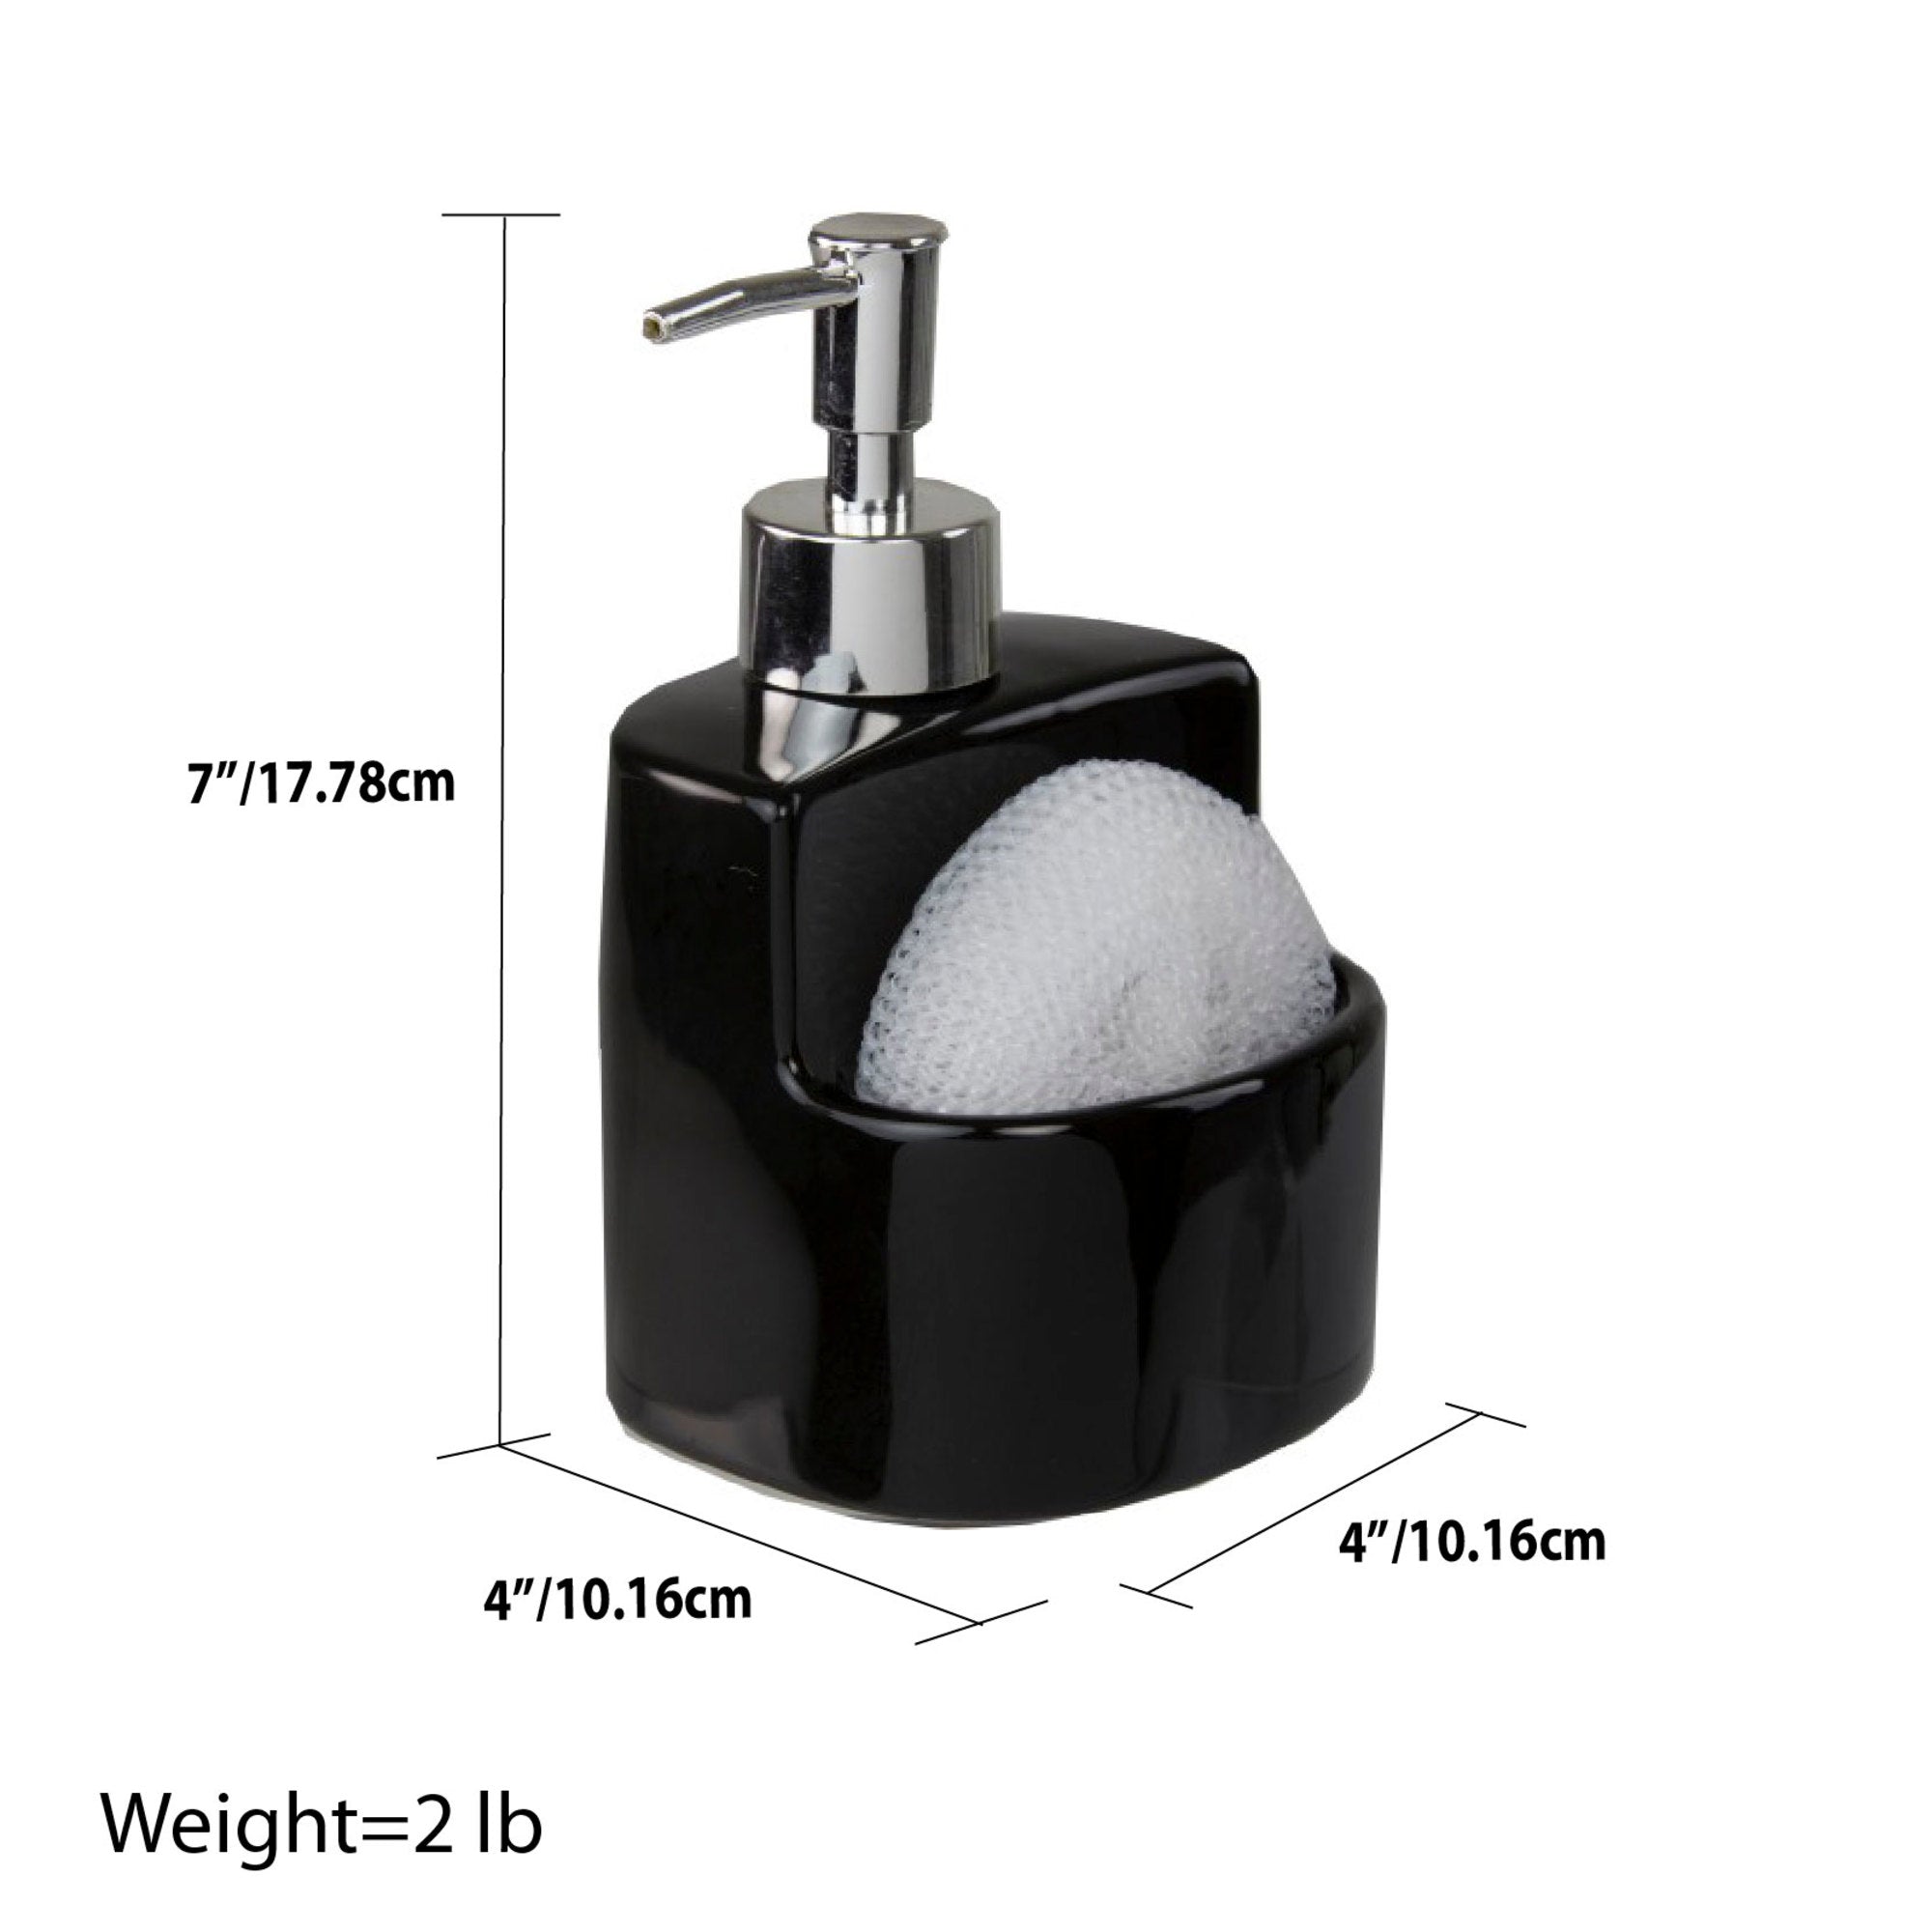 Home Basics 8 oz. Square Ceramic Soap Dispenser with Sponge - Assorted Colors